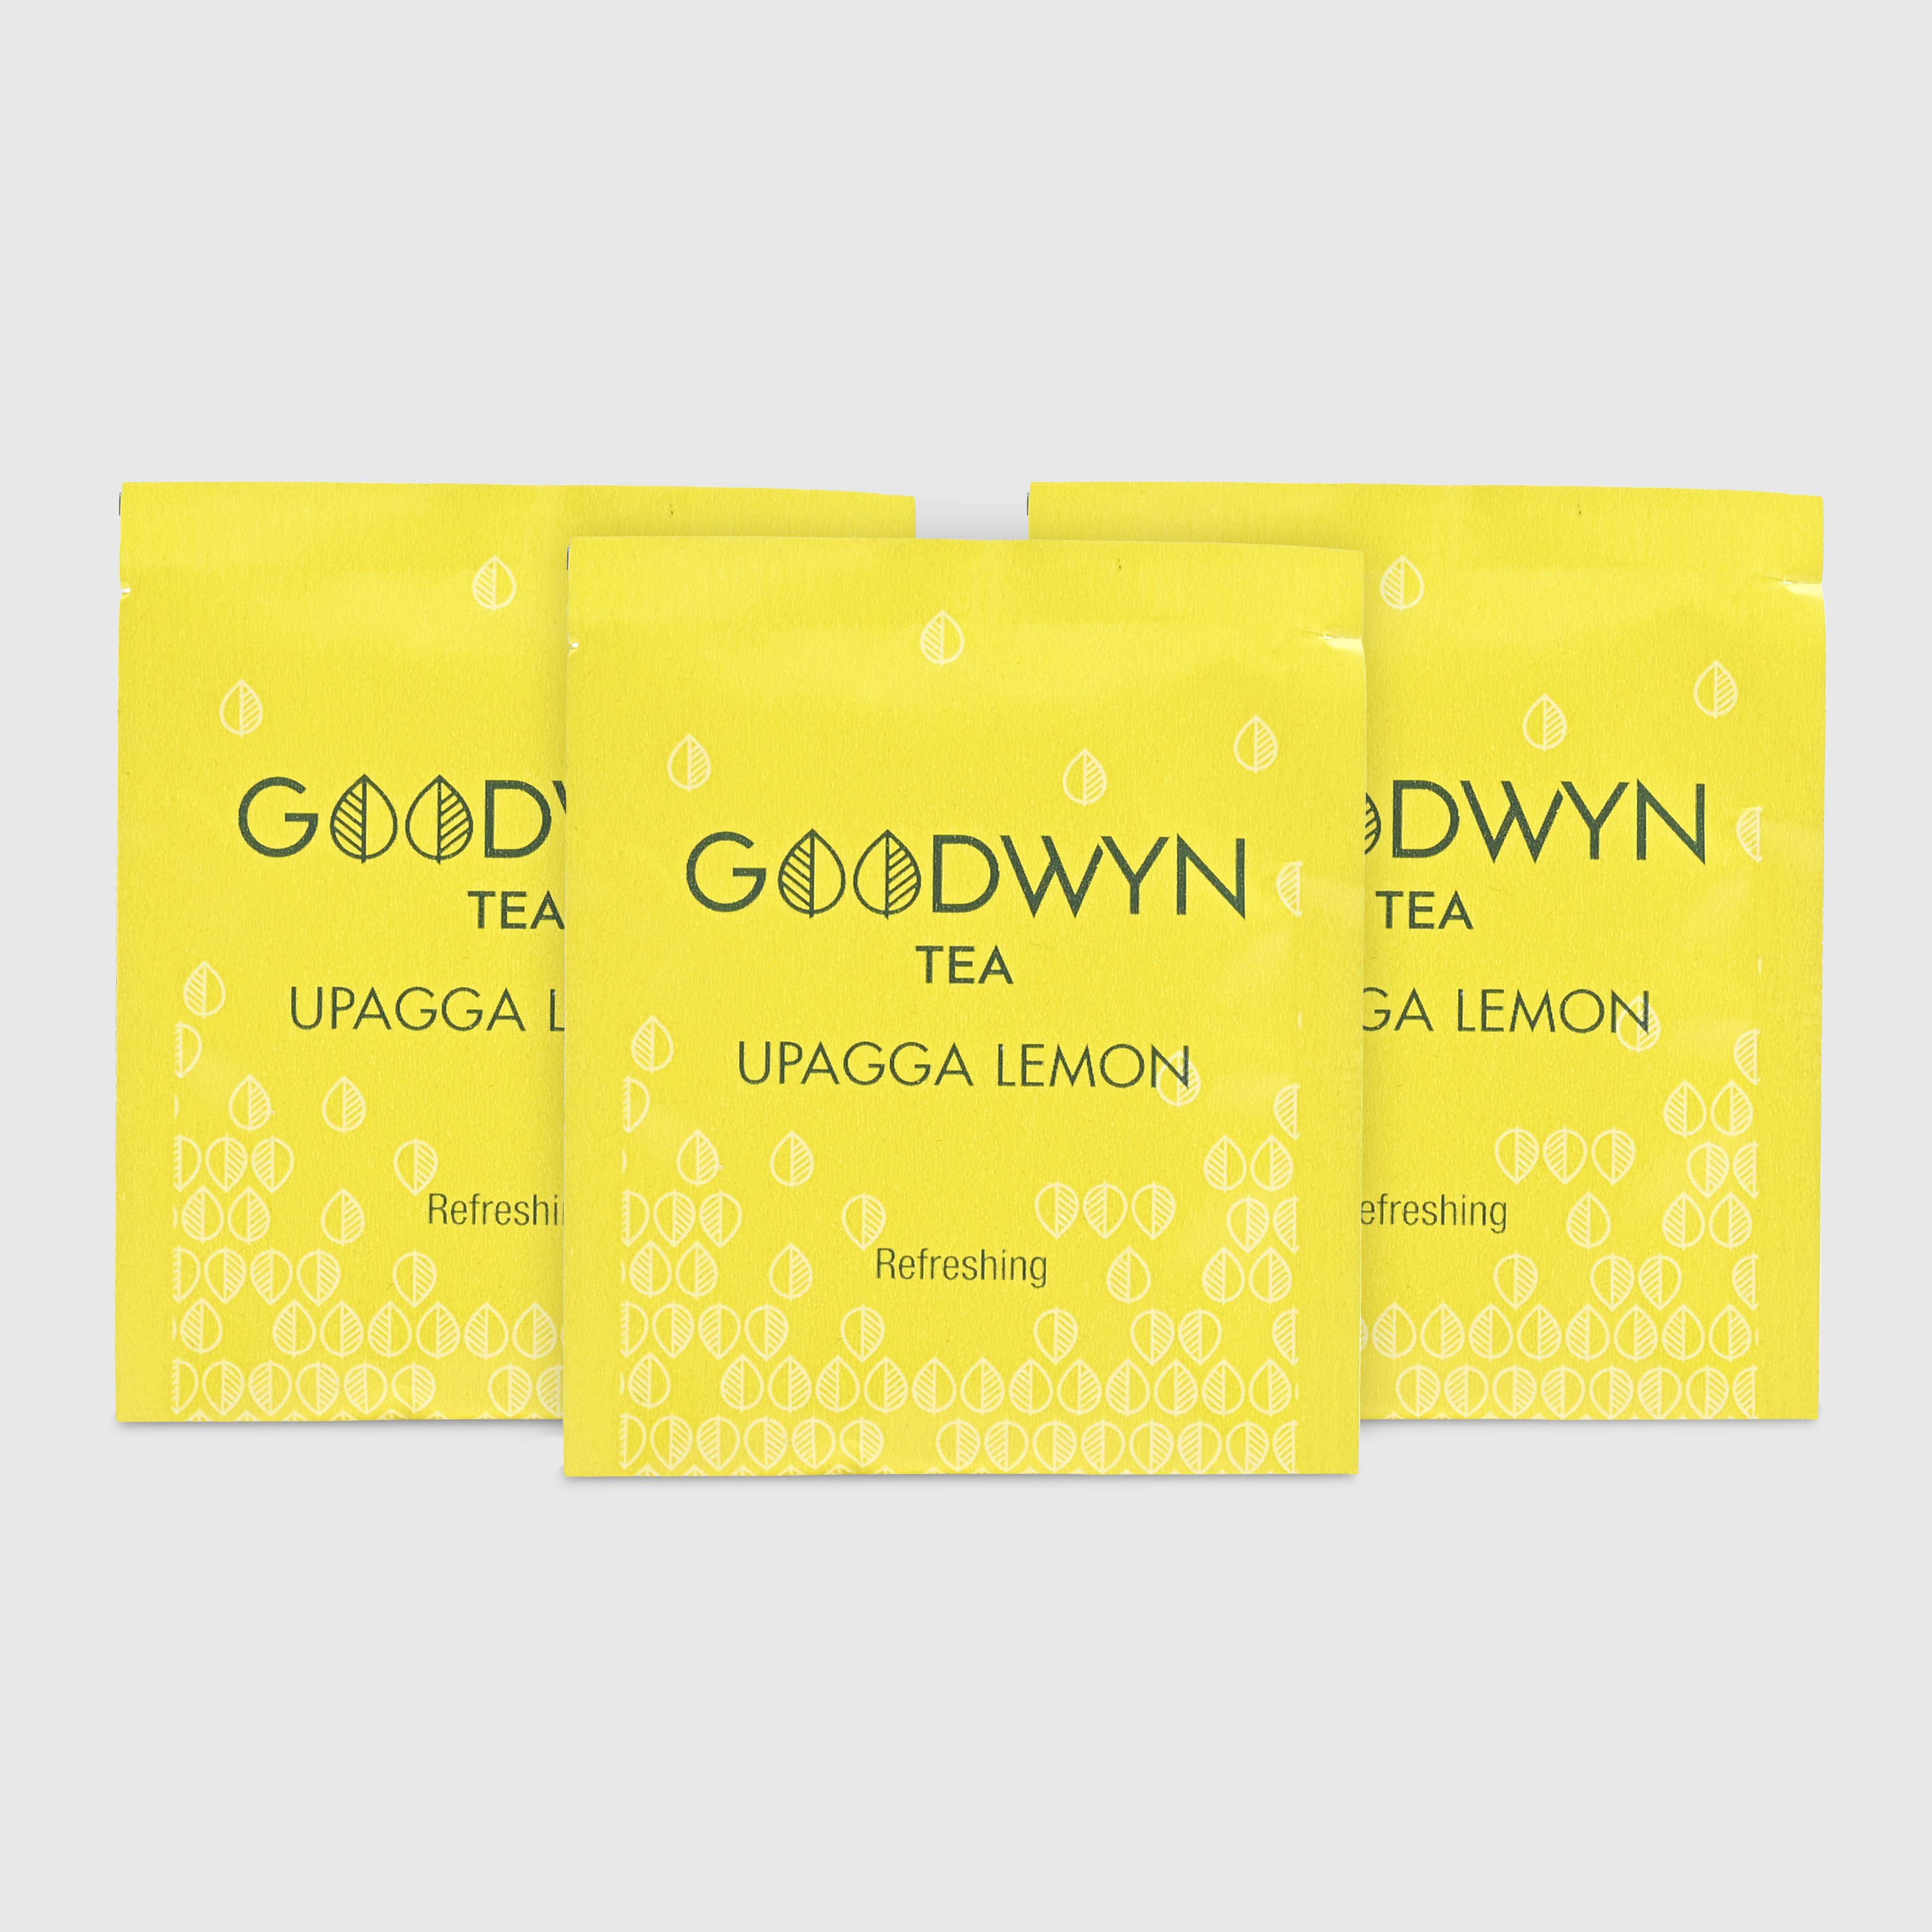 Goodwyn Lemon Enveloped Tea Bags 100s